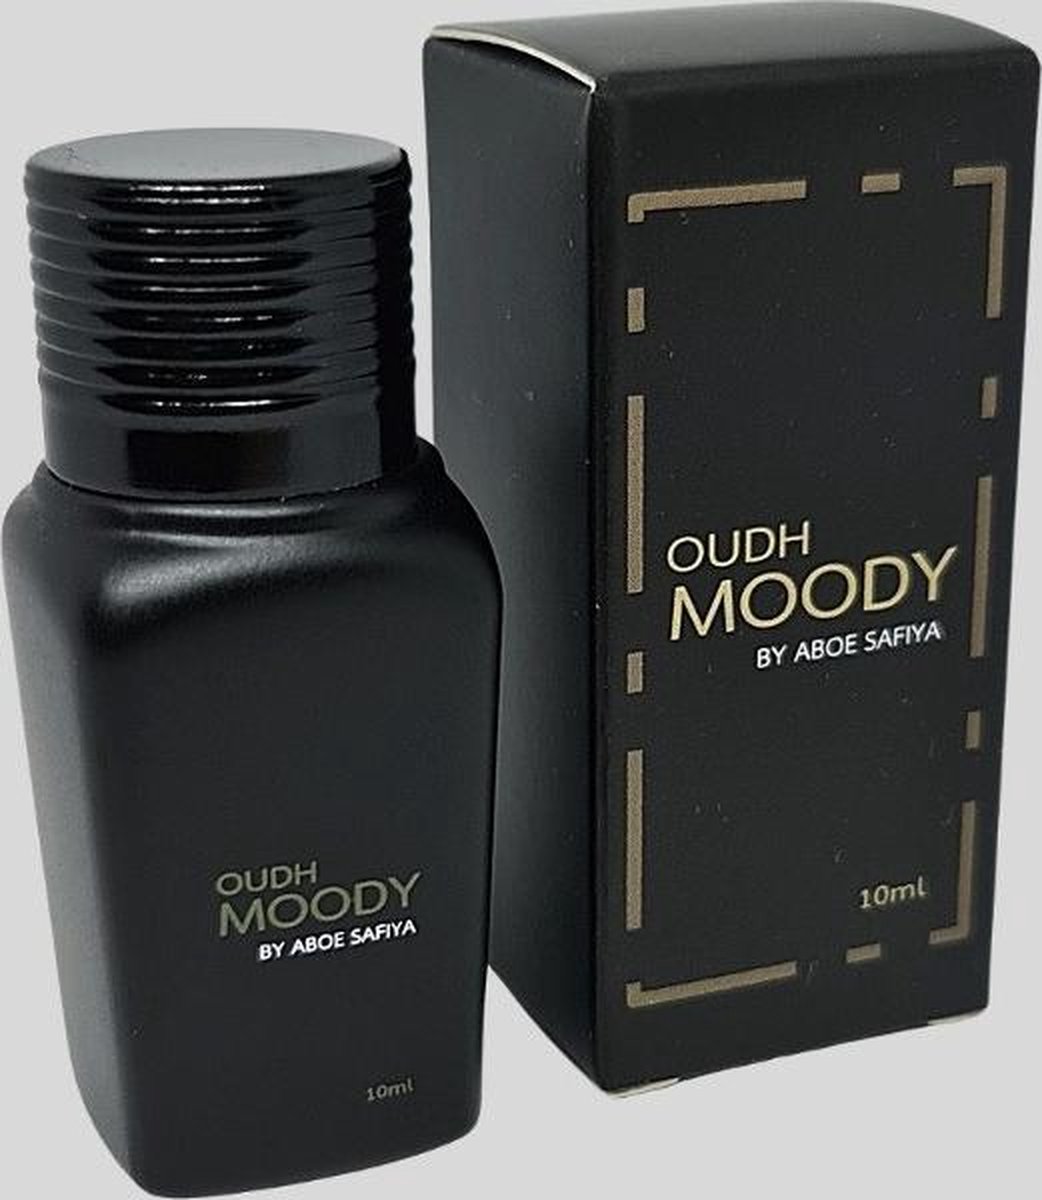 Oudh Moody